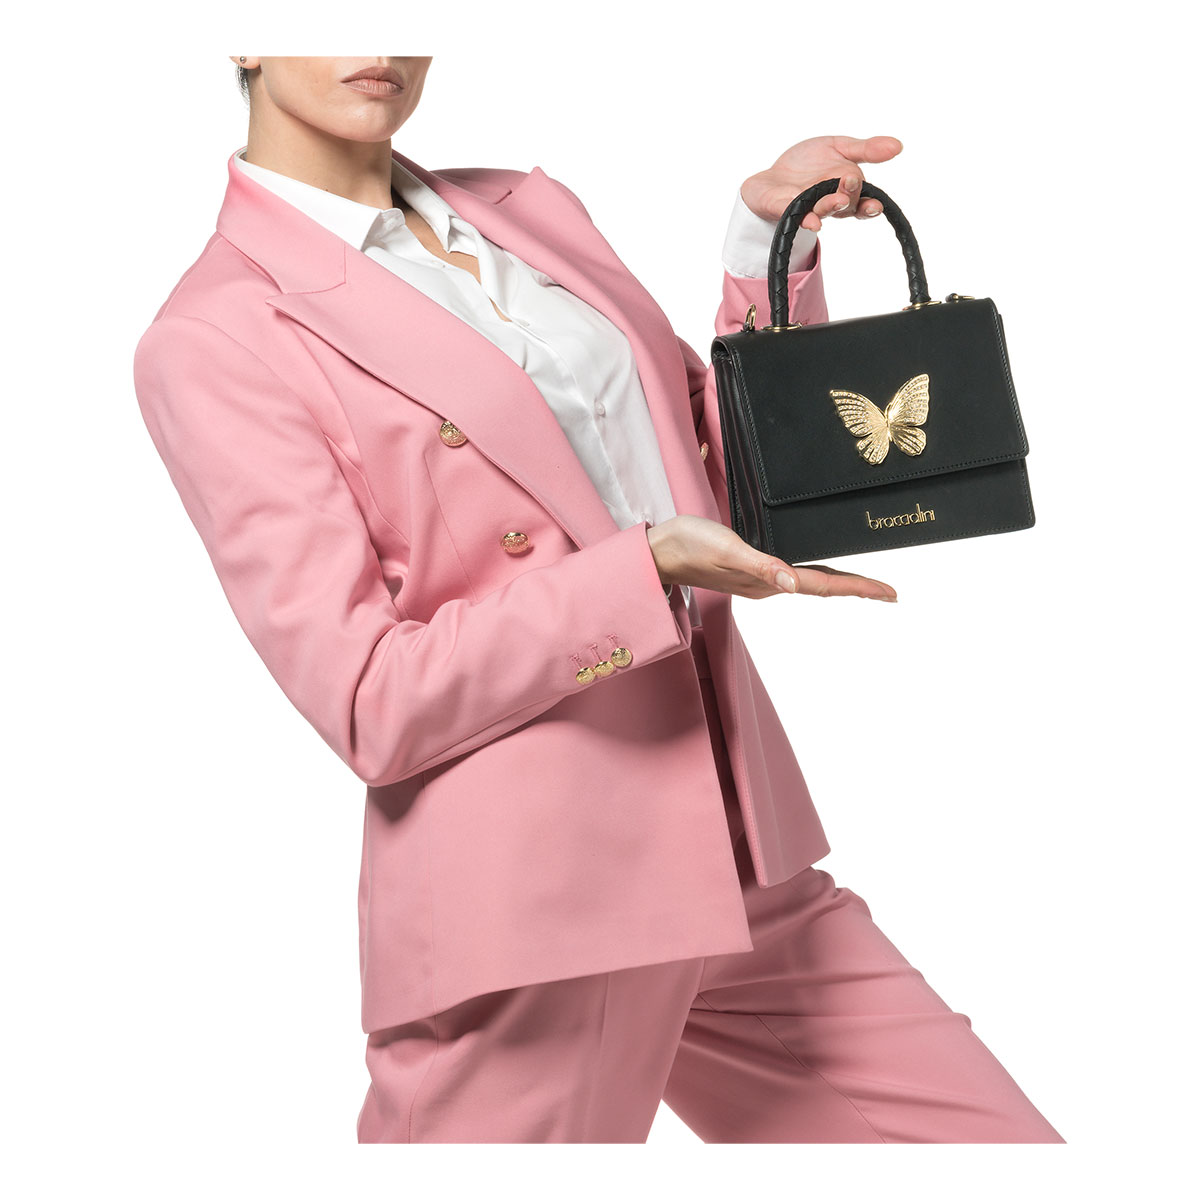 Handbag Audrey  8052991189204 - Graziella Braccialini Official